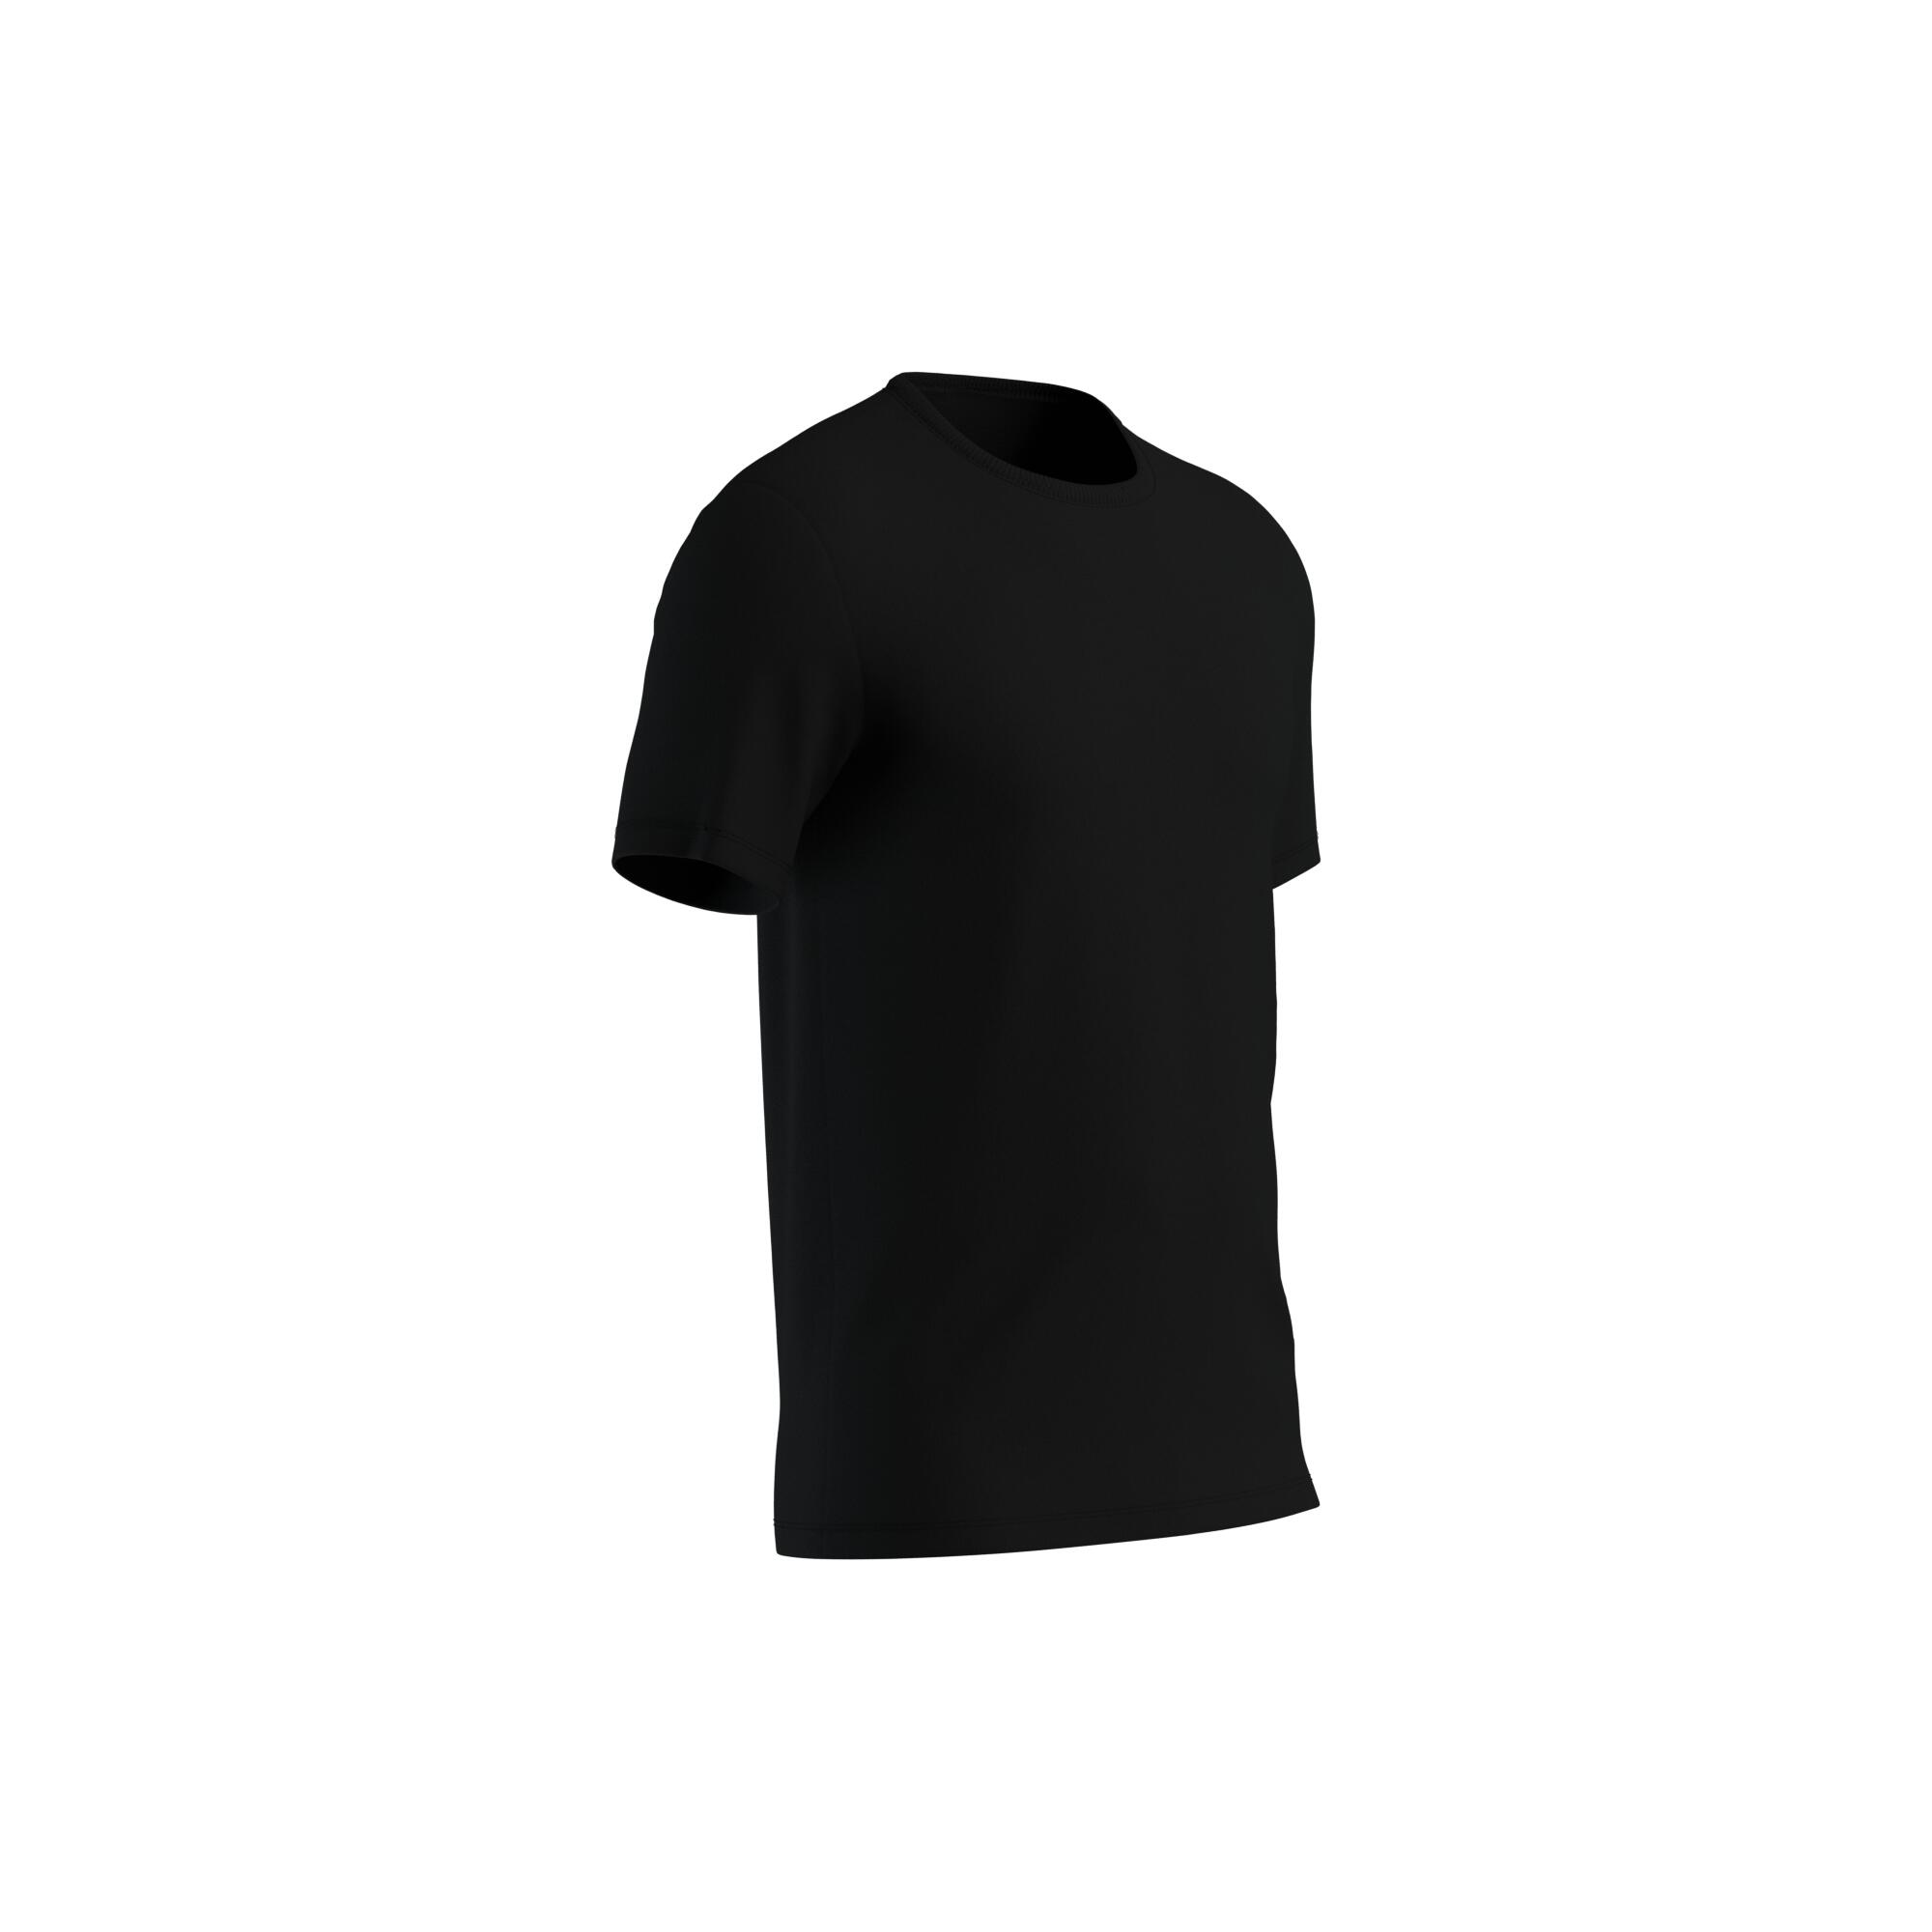 Men's Slim-Fit Fitness T-Shirt 500 - Black 19/19